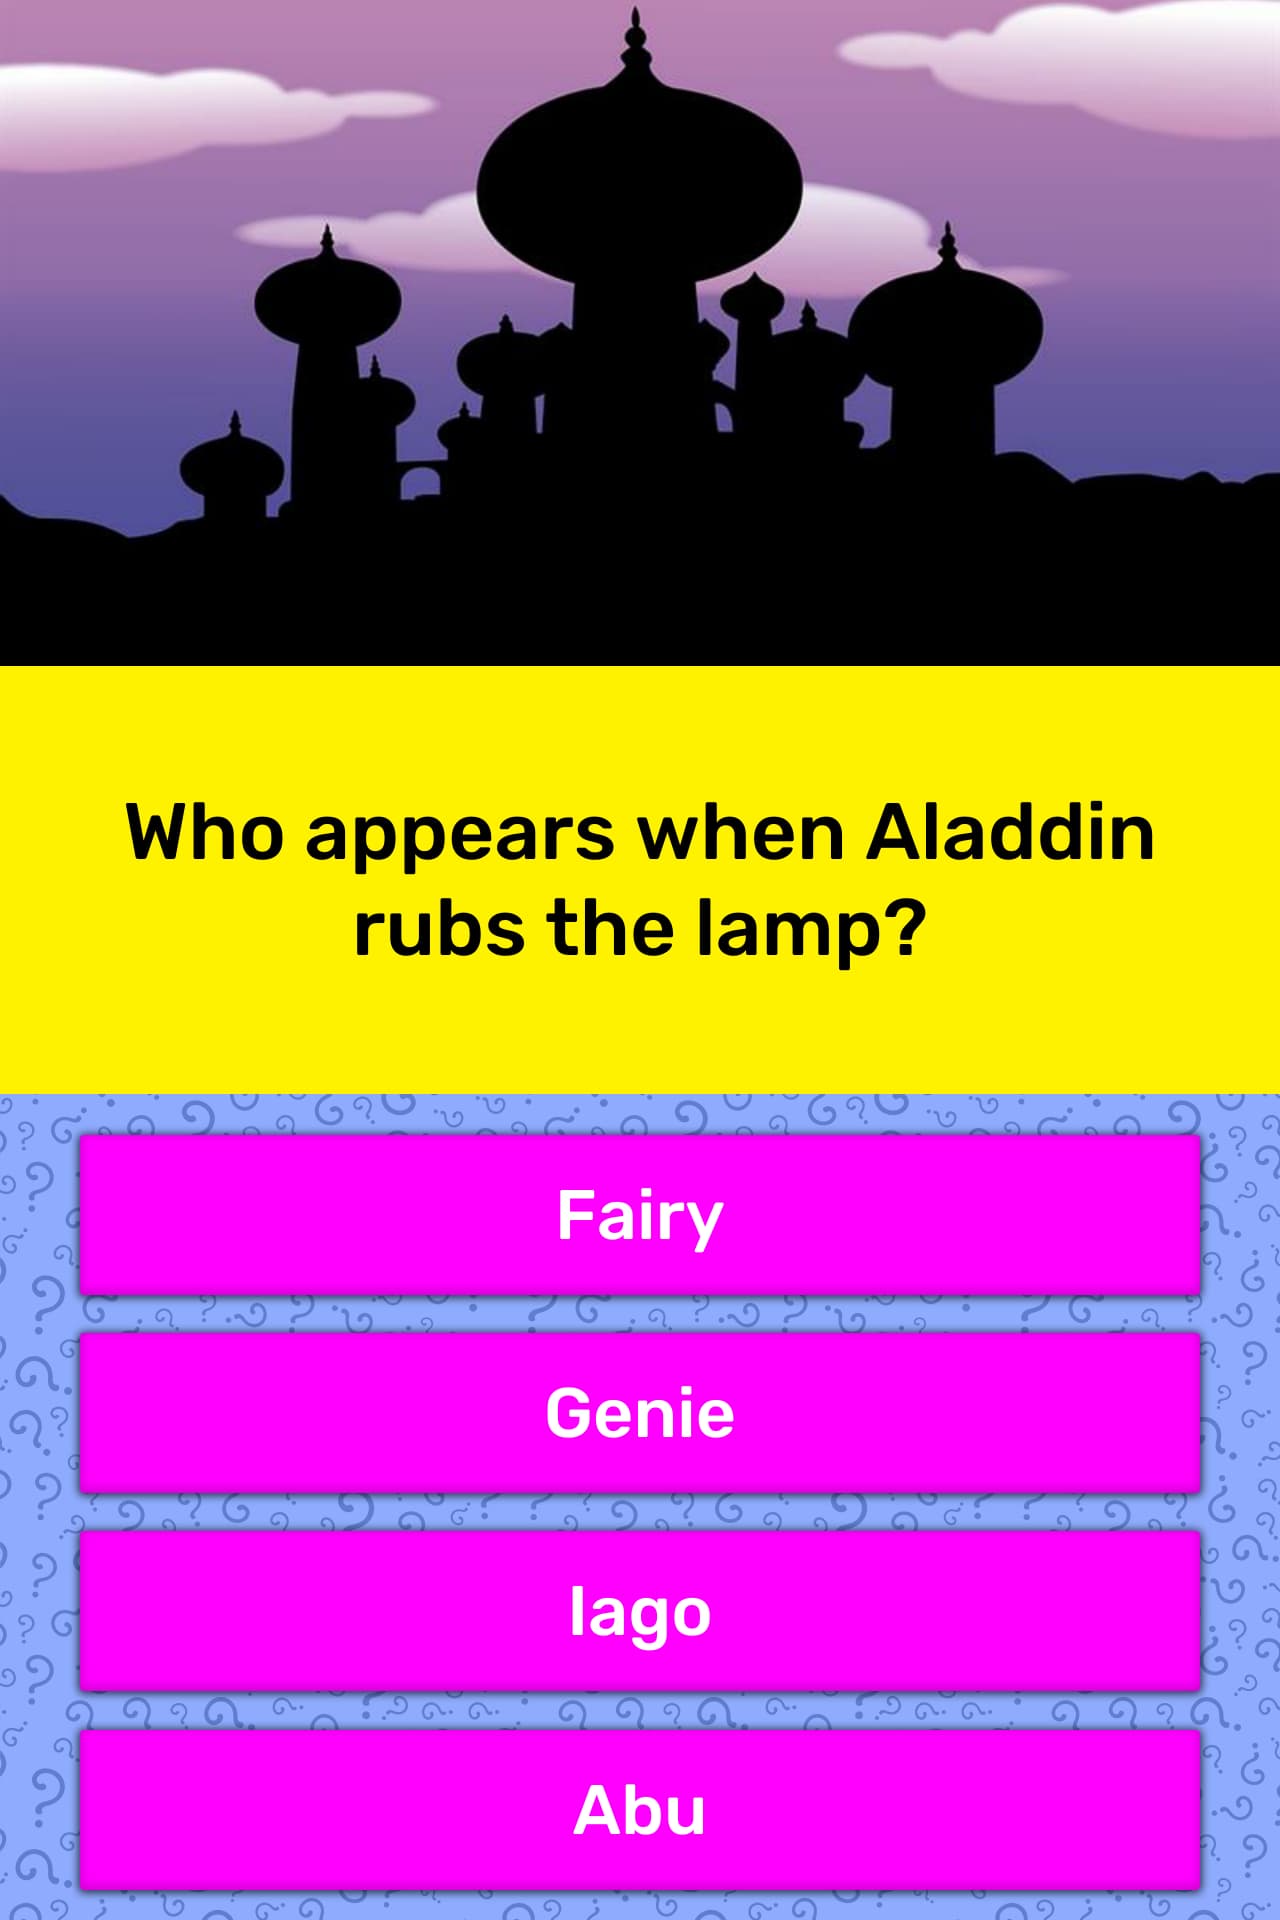 aladdin rubs lamp